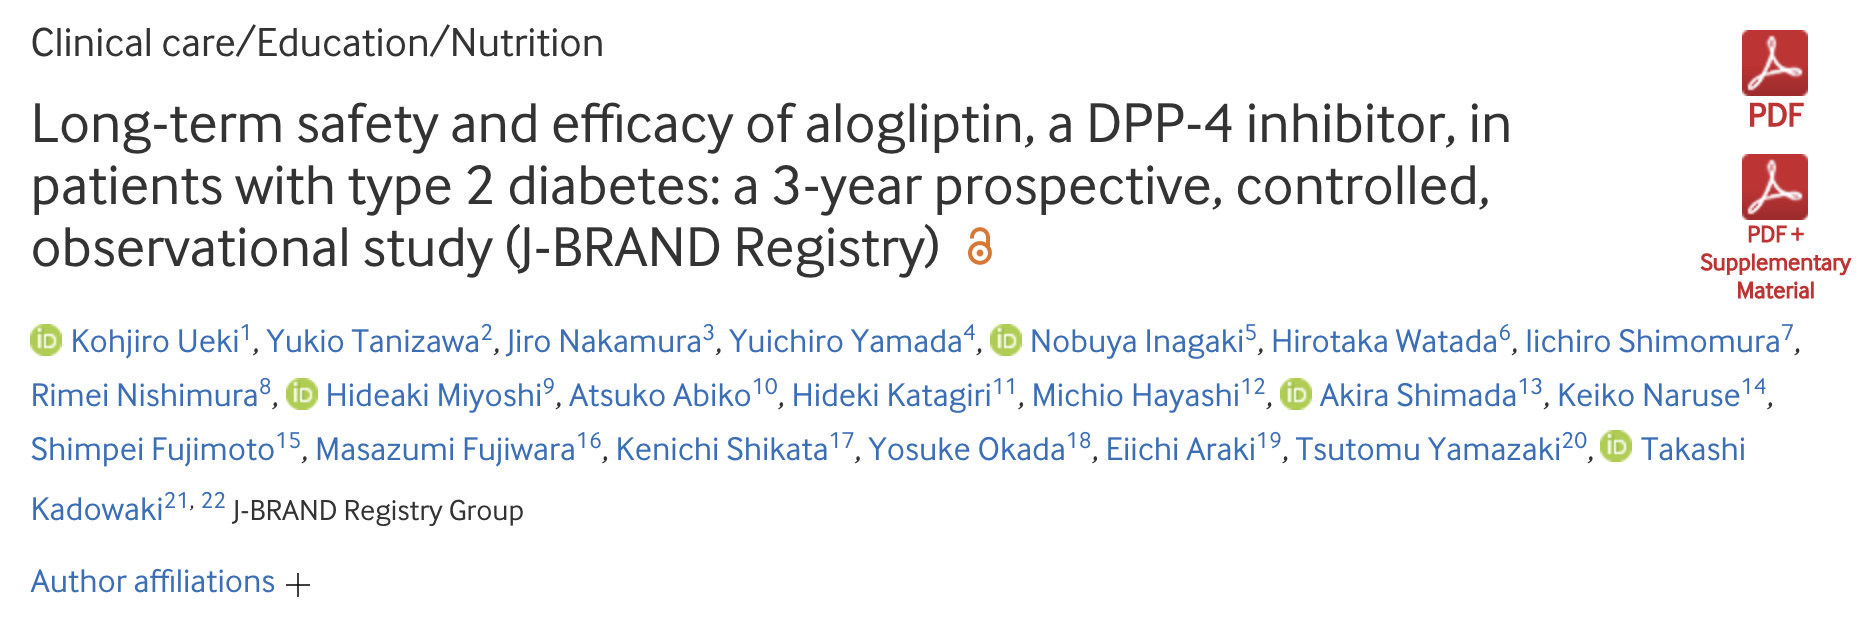 BMJ子刊：基于真实世界研究，长期使用DPP-4抑制剂对2型糖尿病患者的安全性和有效性